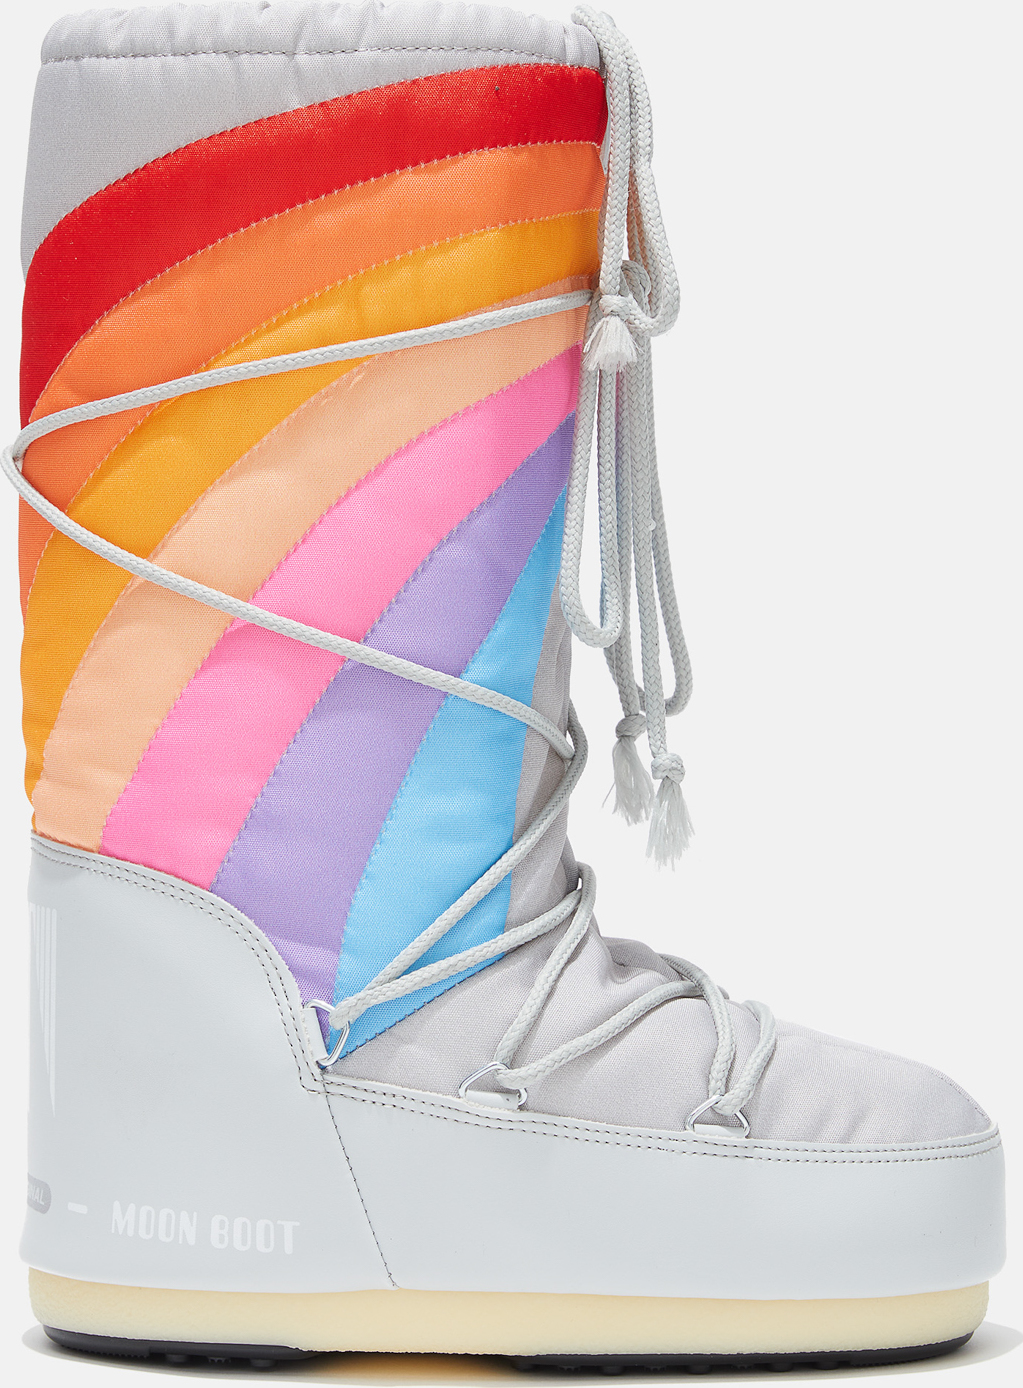 Zimní boty MOON BOOT Icon rainbow duhové Velikost: EU 42/44